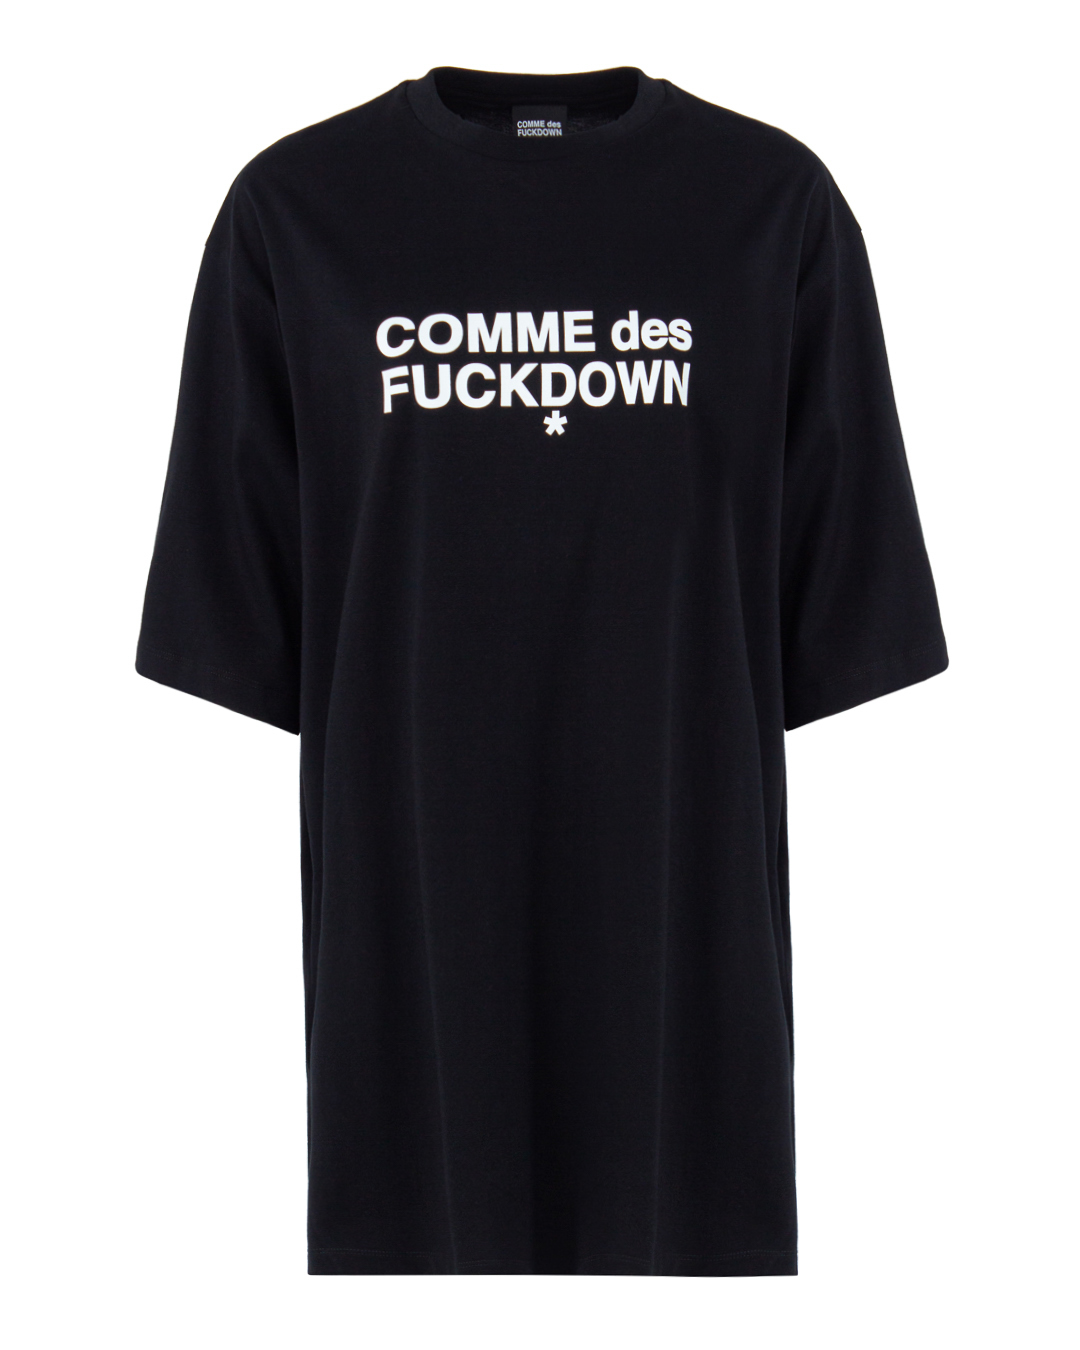 платье COMME des FUCKDOWN FDS3CDFD2086 черный xs, размер xs - фото 1